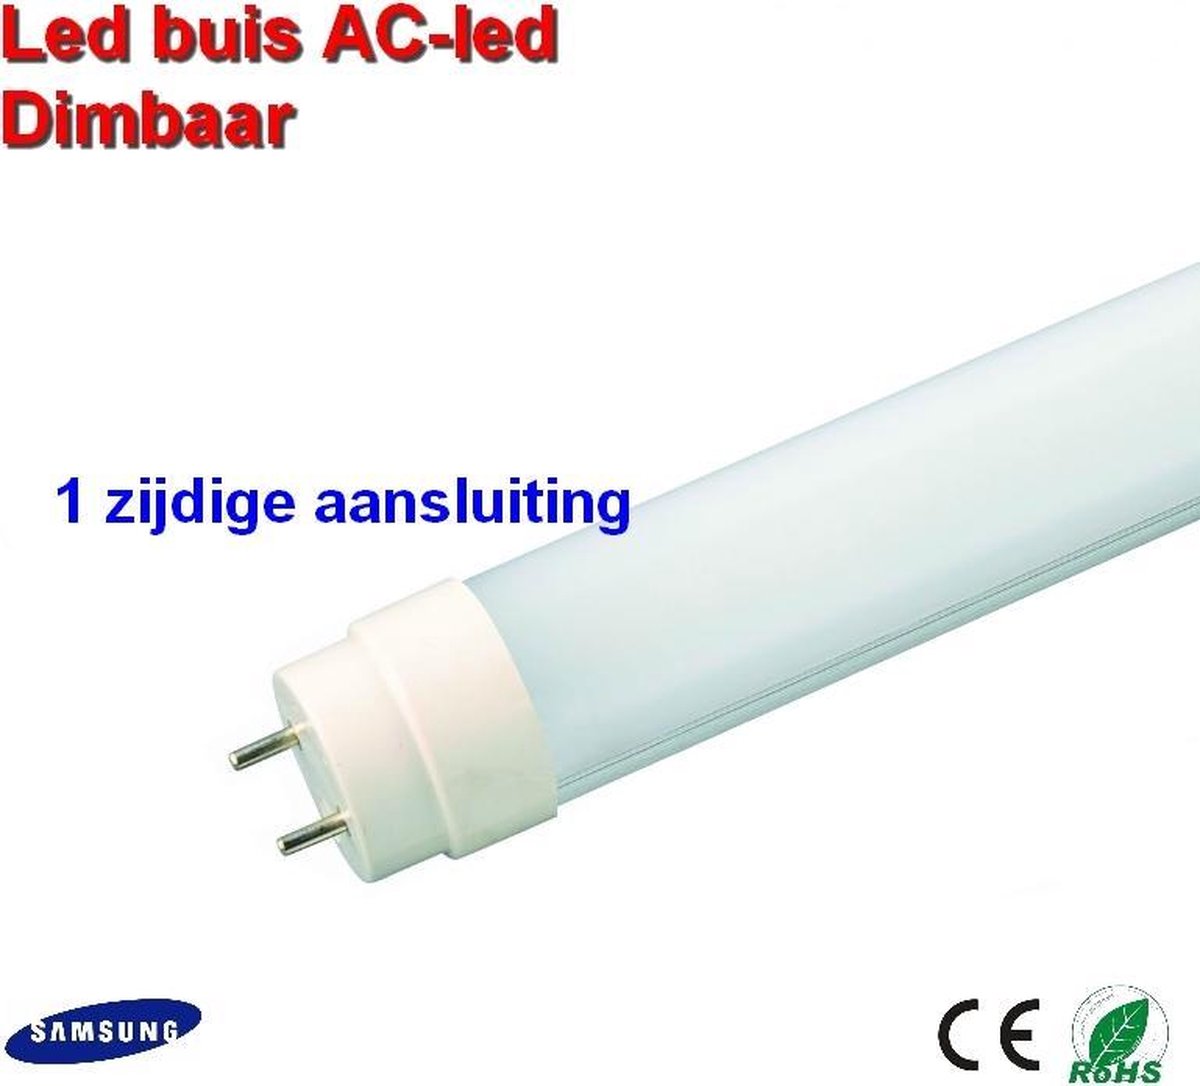 salami antiek Lang LED TL buis 120cm AC led Dimbaar Warm-wit - 1 zijdige aansluiting | bol.com